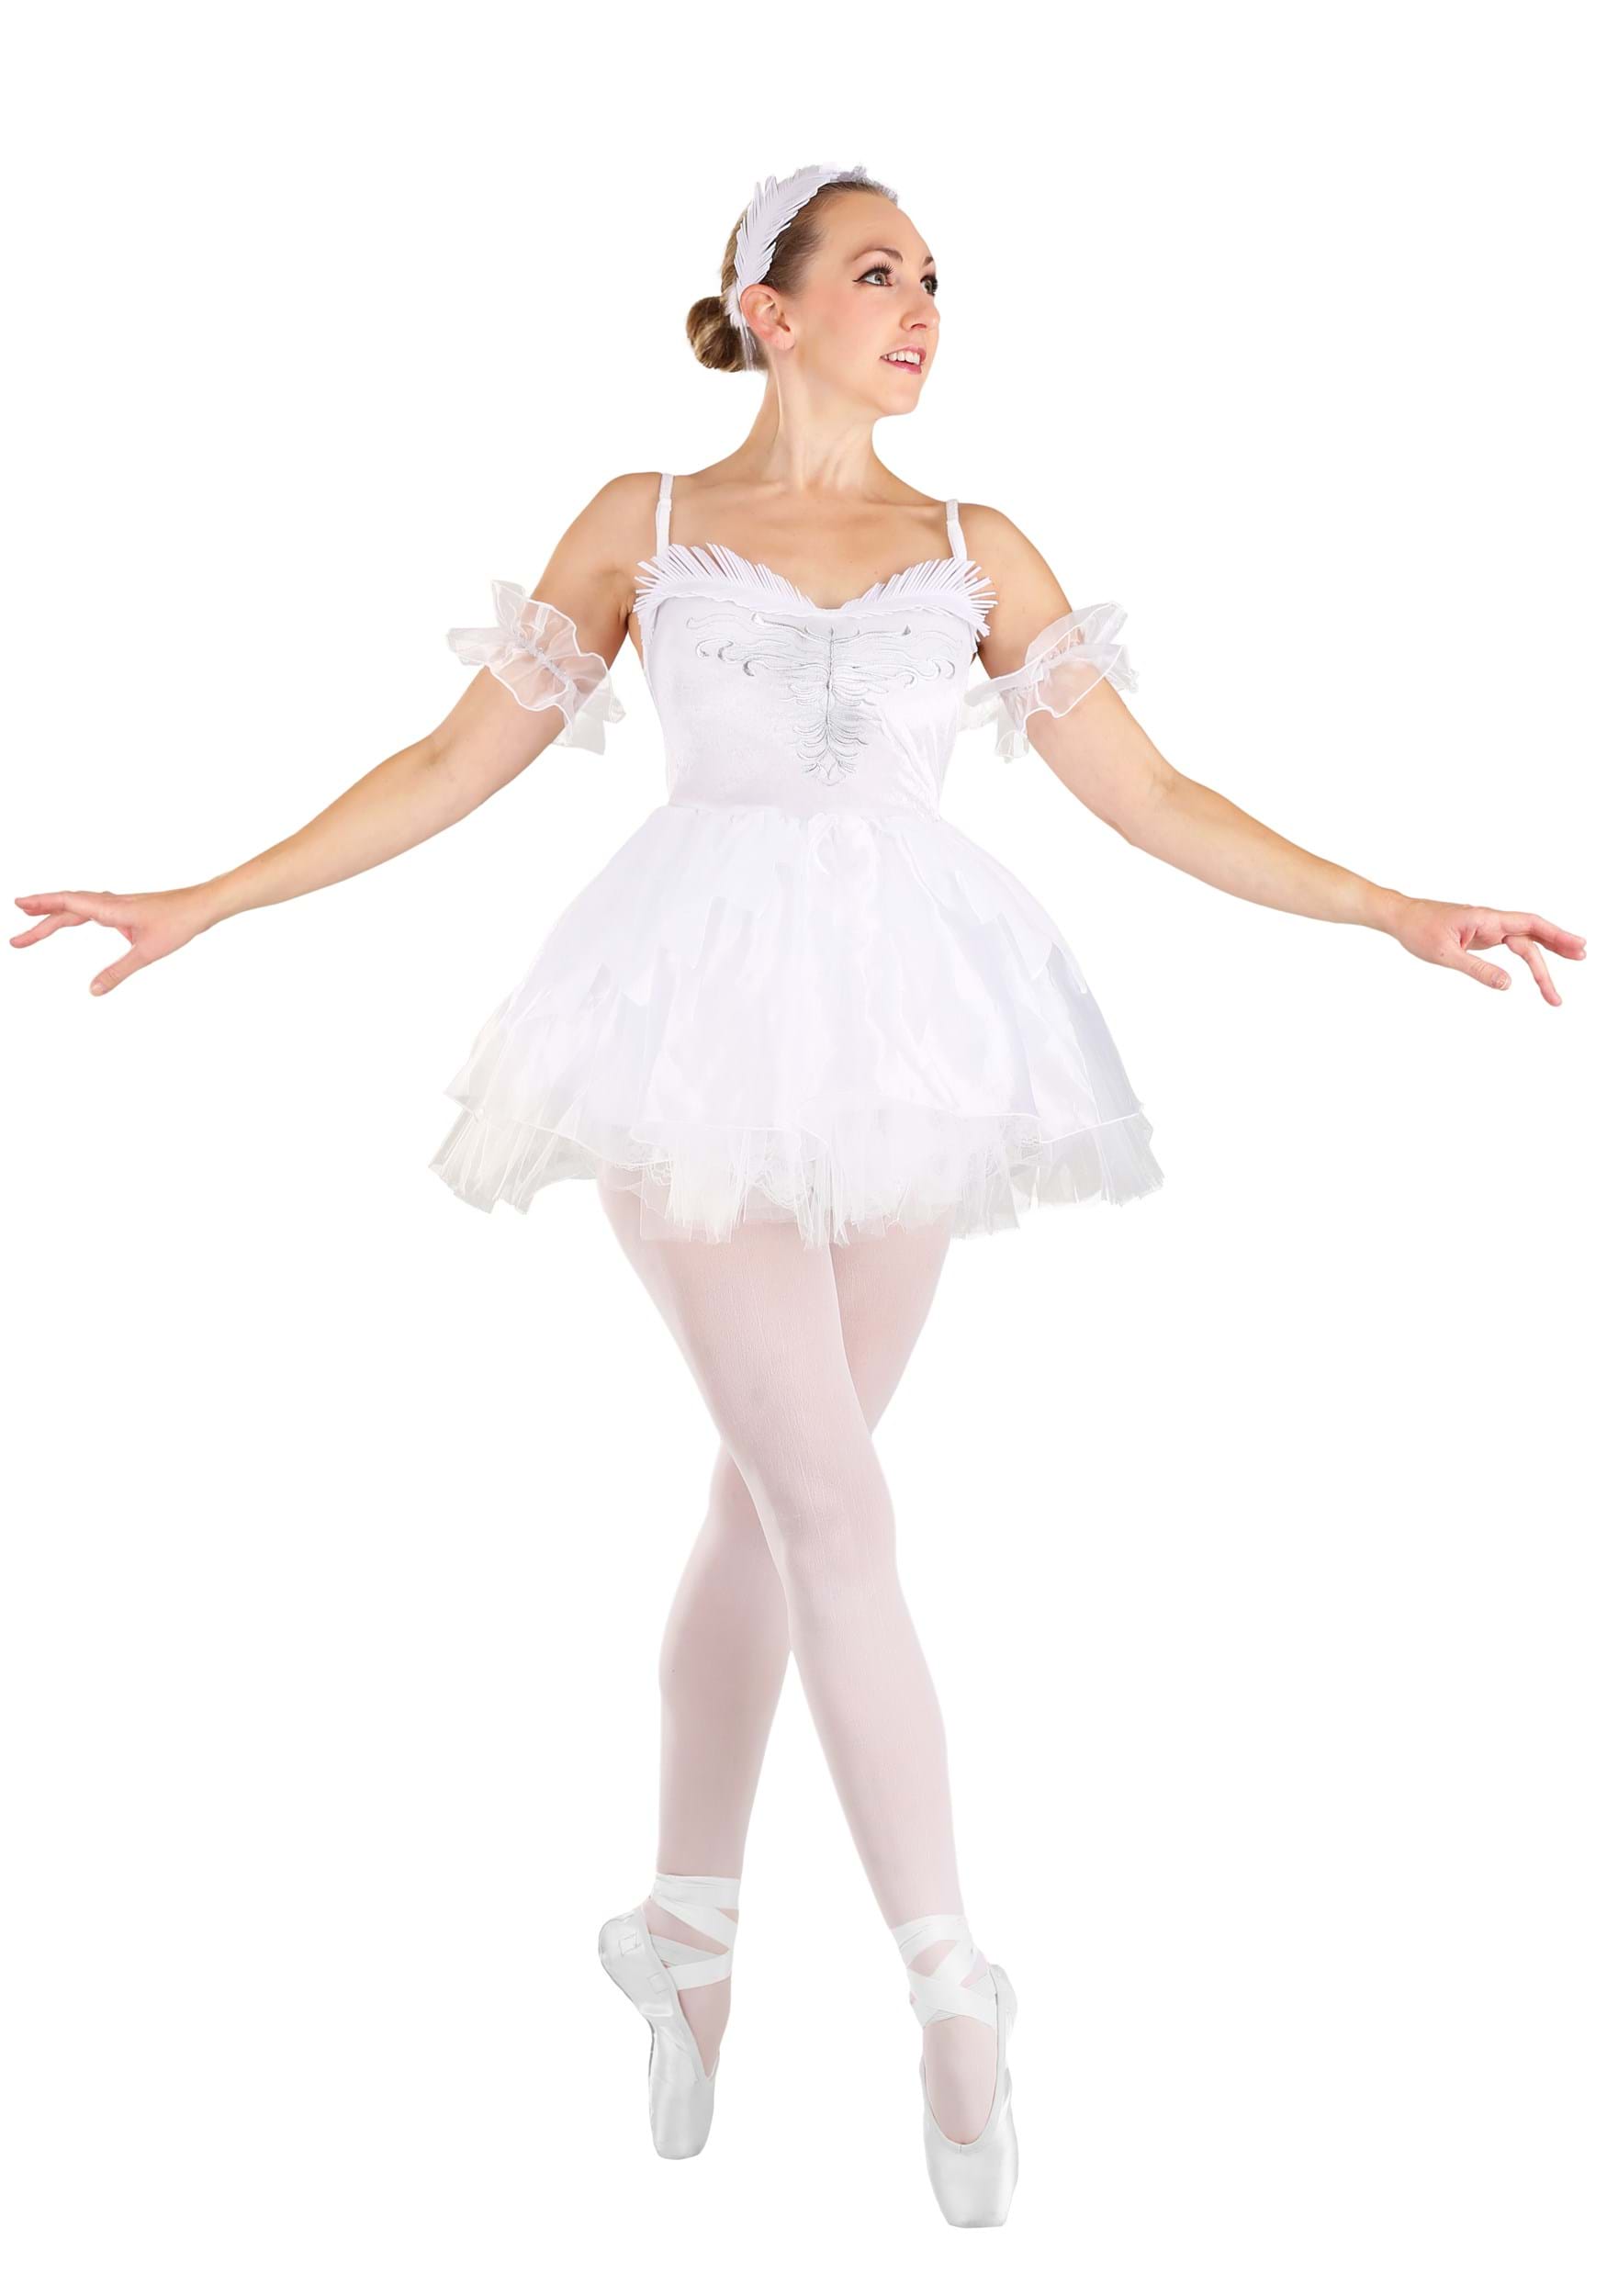 White Swan Premium De Halloween Vestido de fantasía Falda Tutú De Ballet Todas Las Tallas Por Katz 